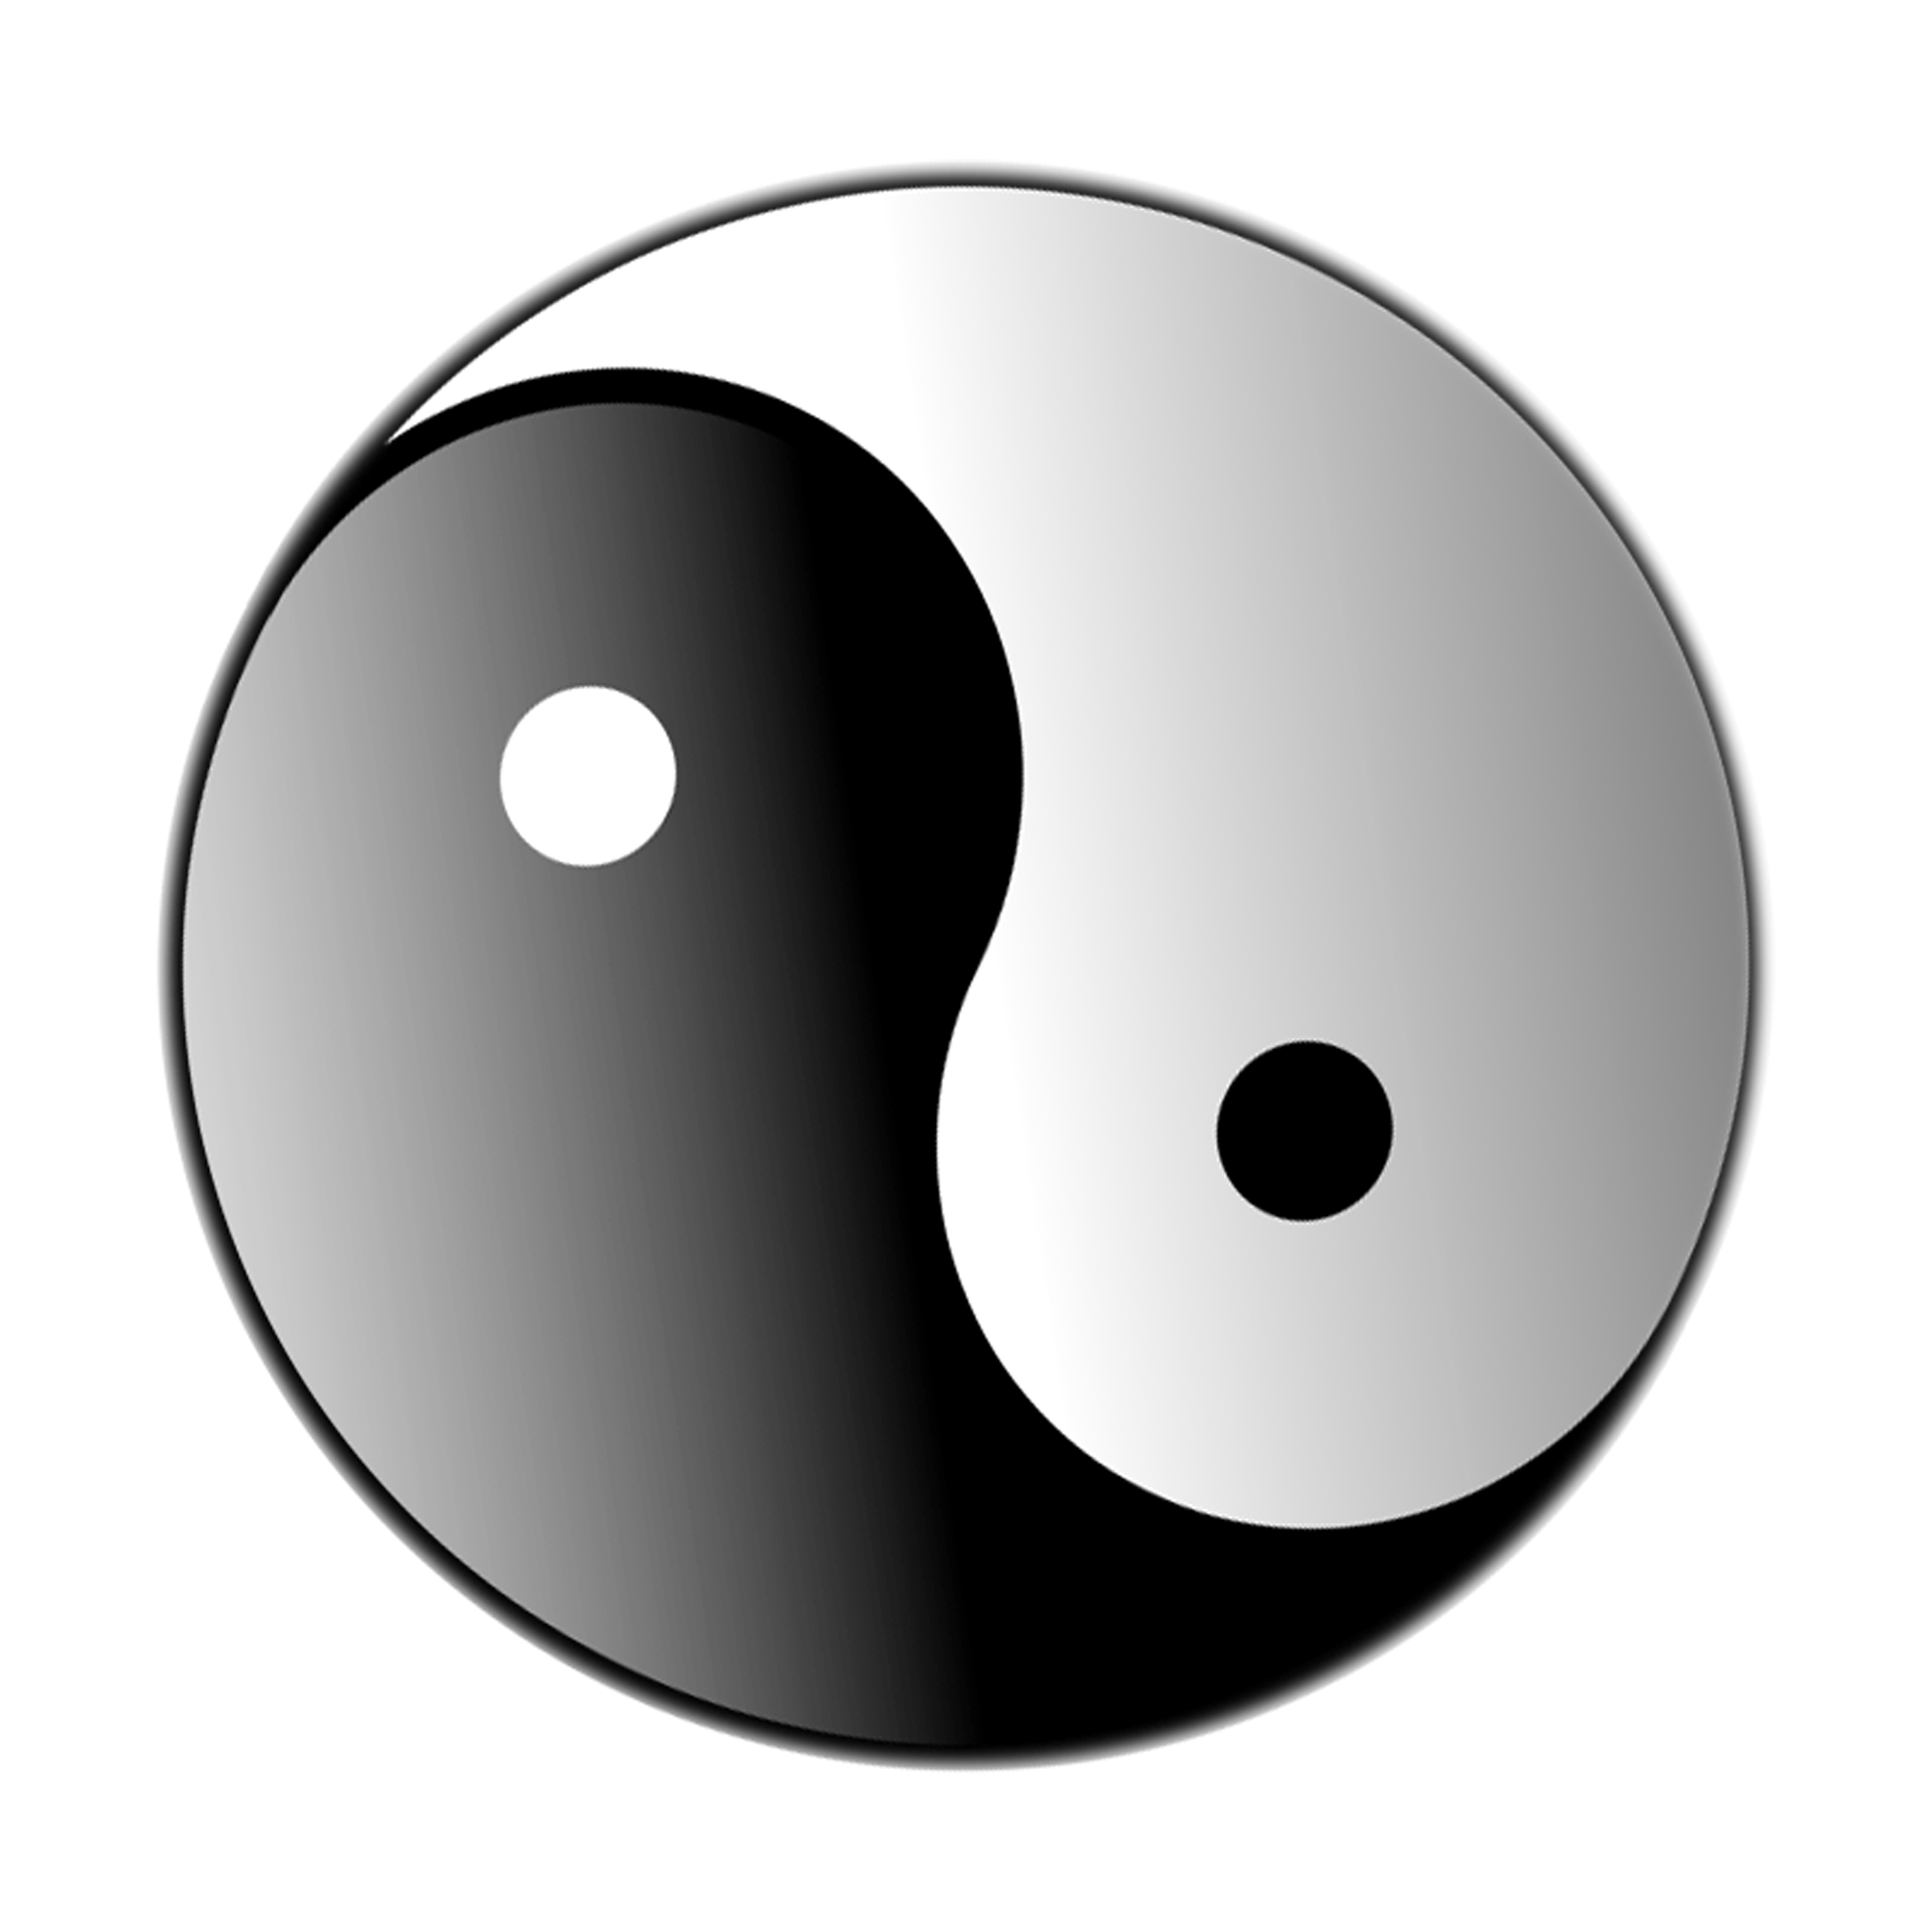 Icones Yin yang, images Yin yang png et ico